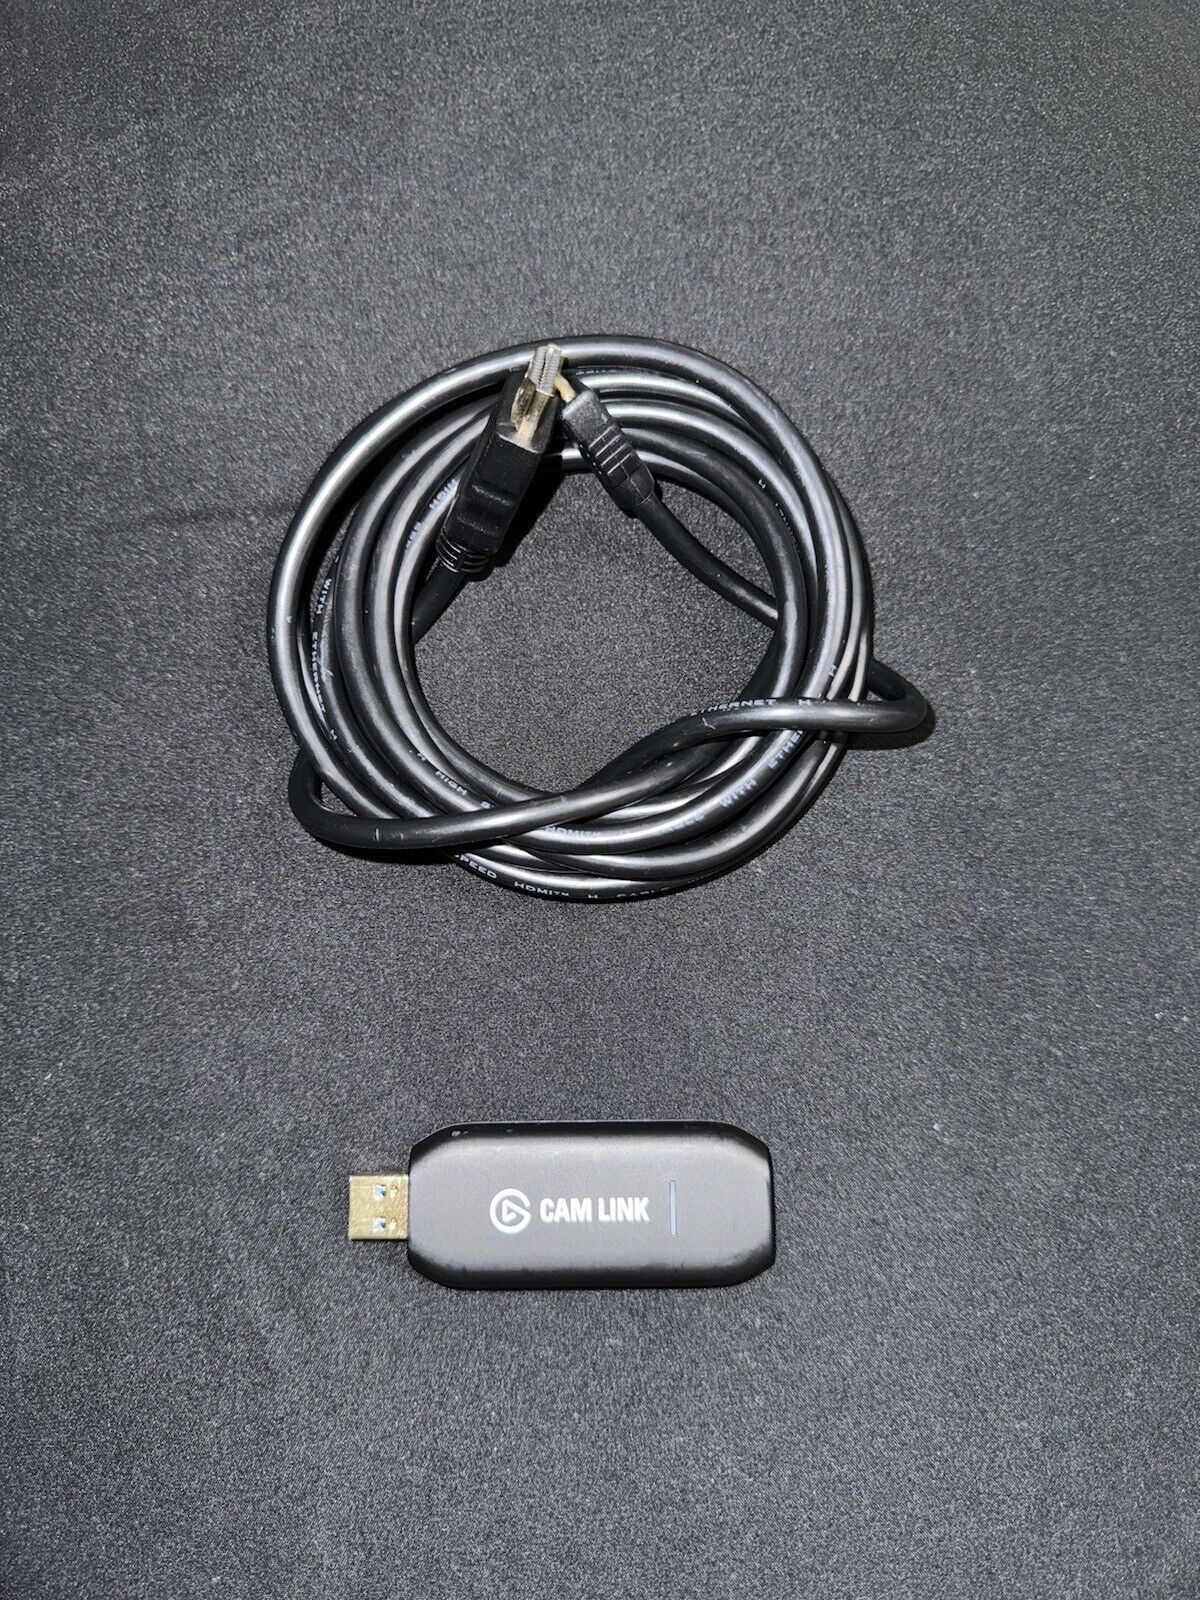 Elgato Cam Link 4K - USB Camera Capture Stick